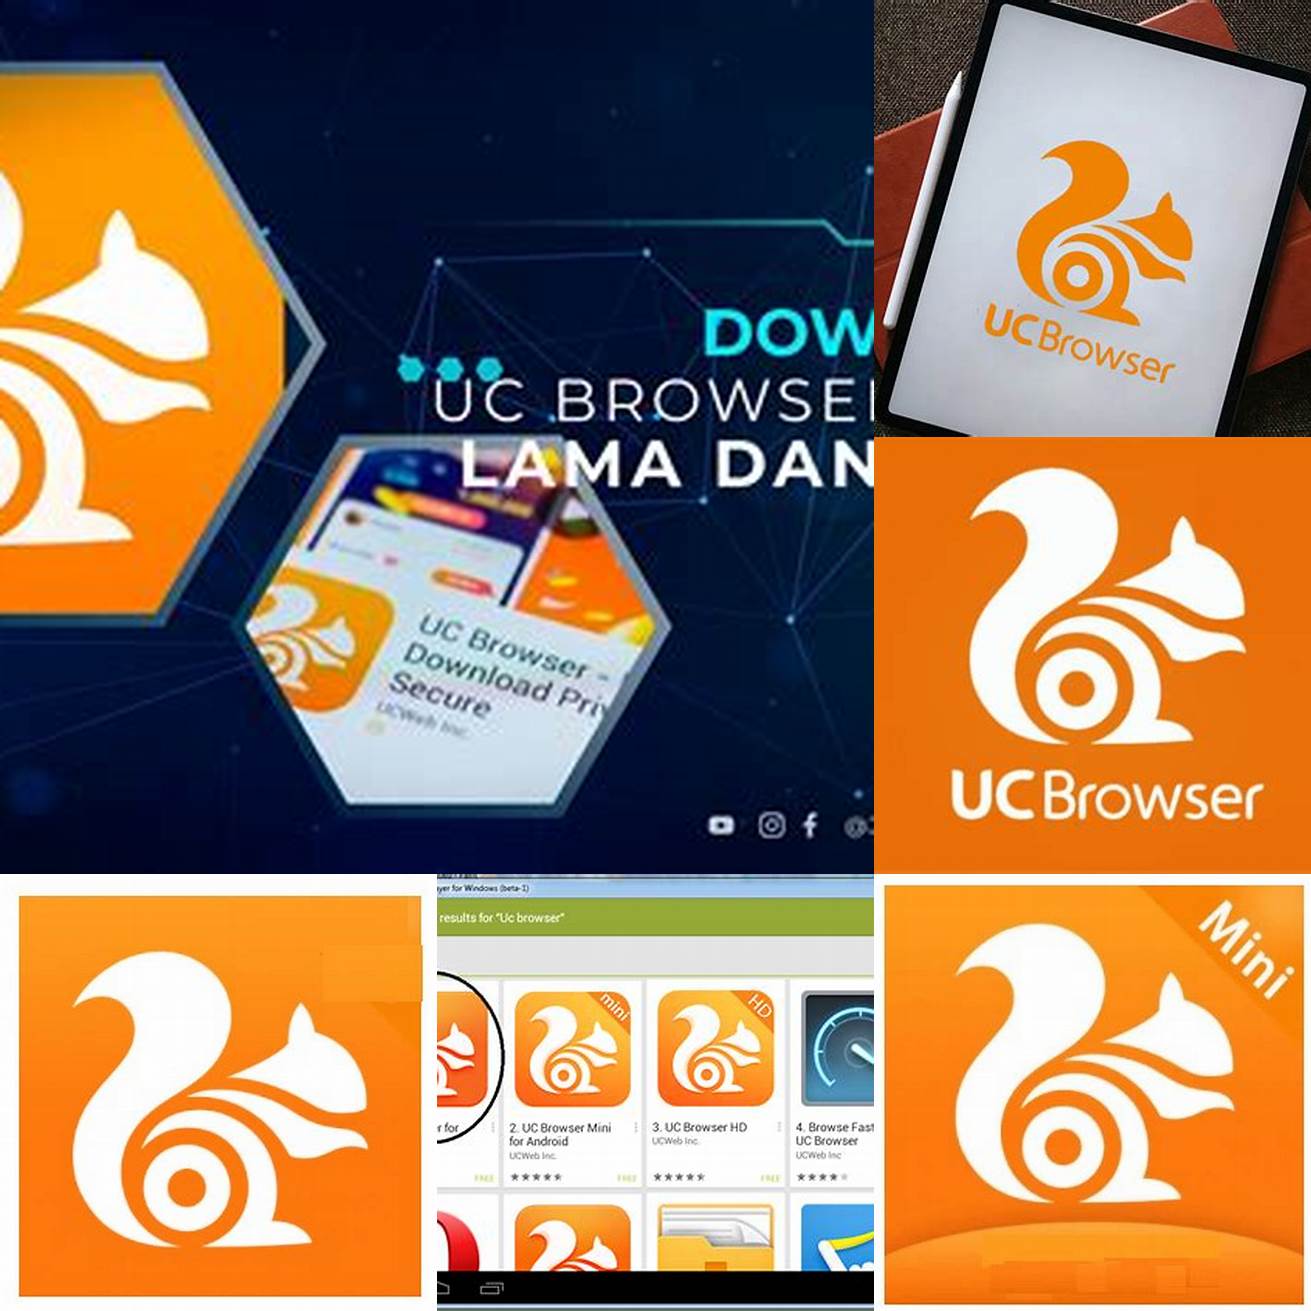 Pilih versi UC Browser yang ingin kamu download